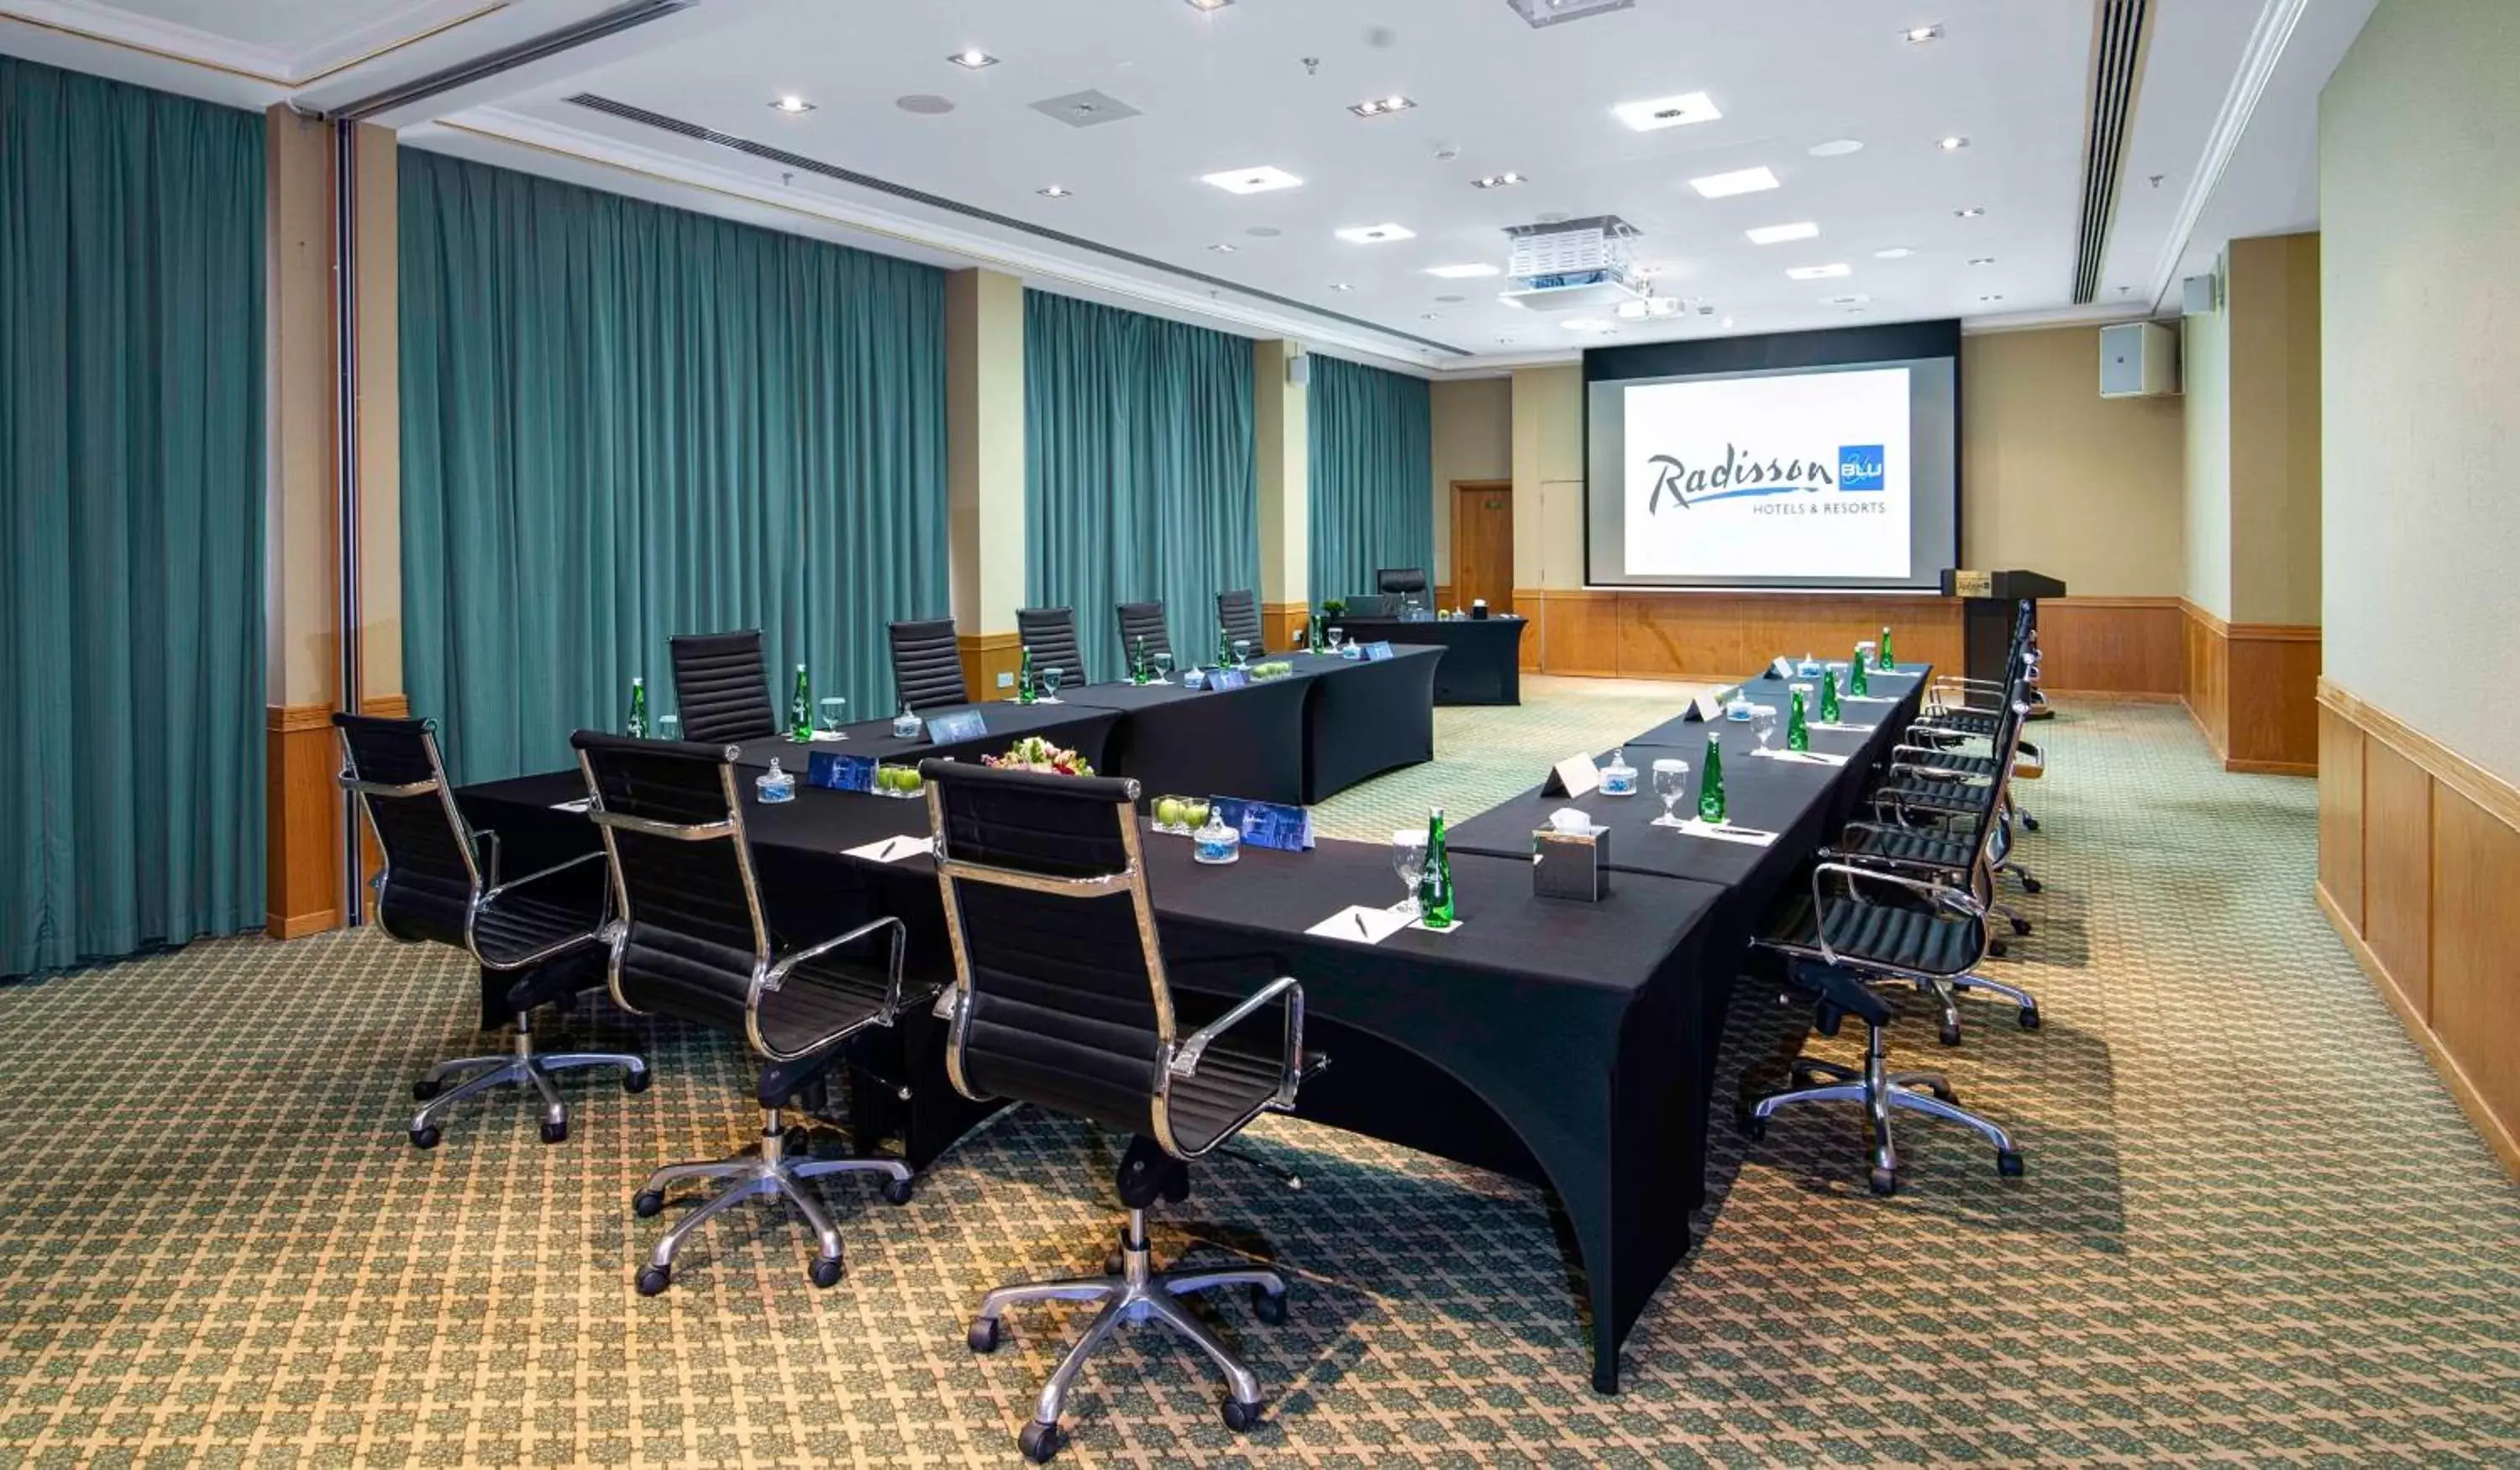 Meeting/conference room in Radisson Blu Hotel & Resort, Al Ain